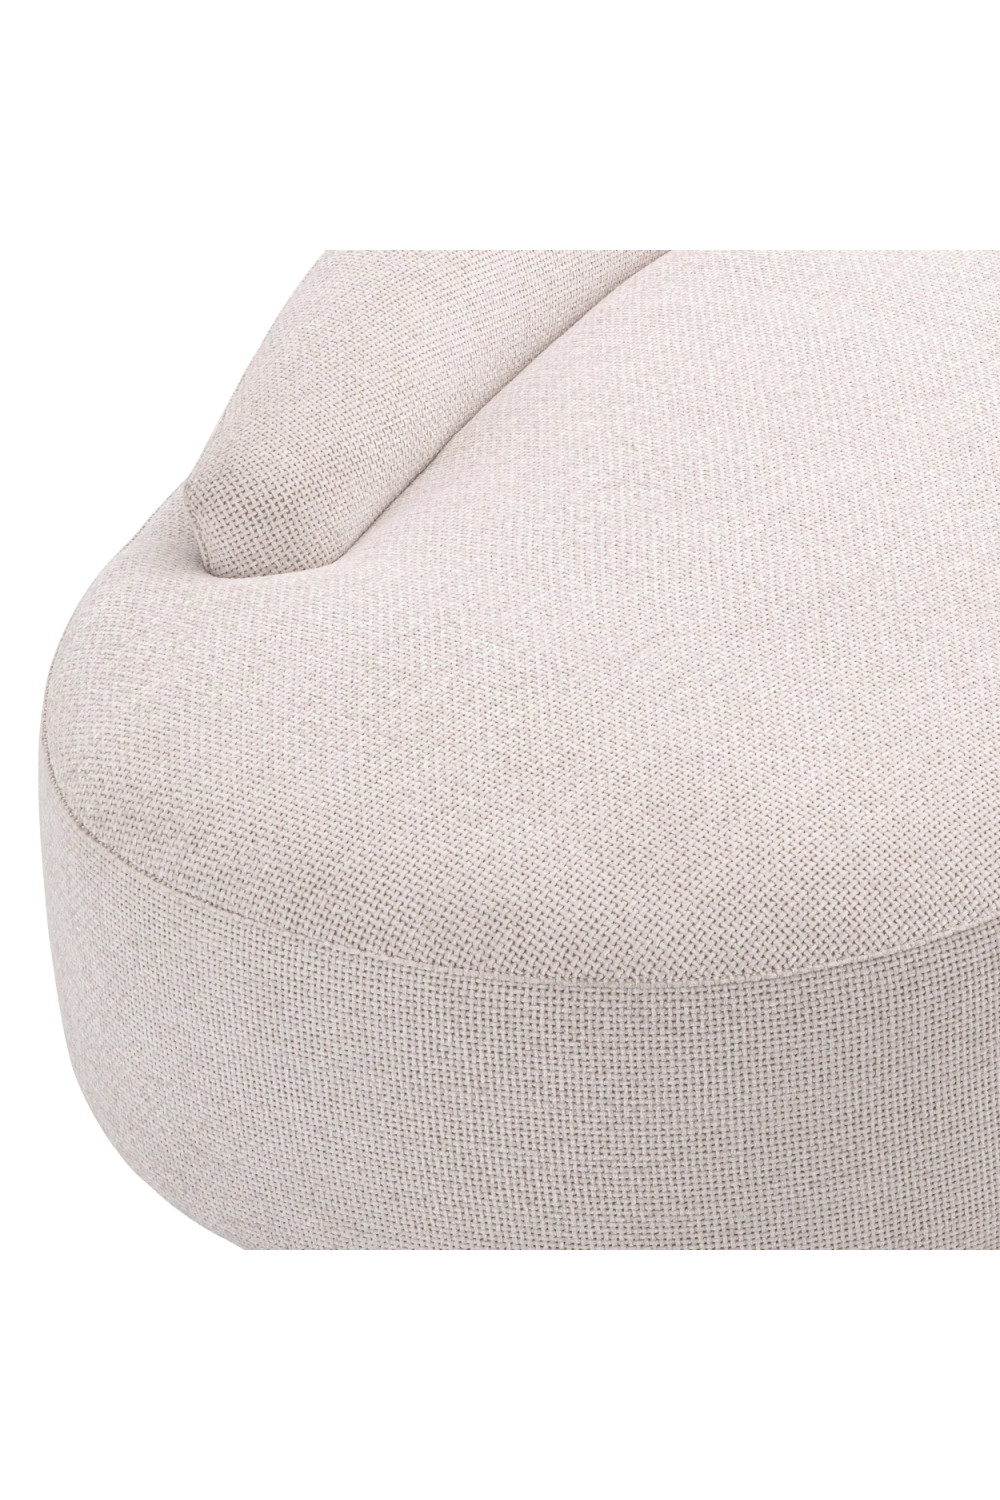 White Modern Curved Sofa | Eichholtz Rivolo | Oroa.com